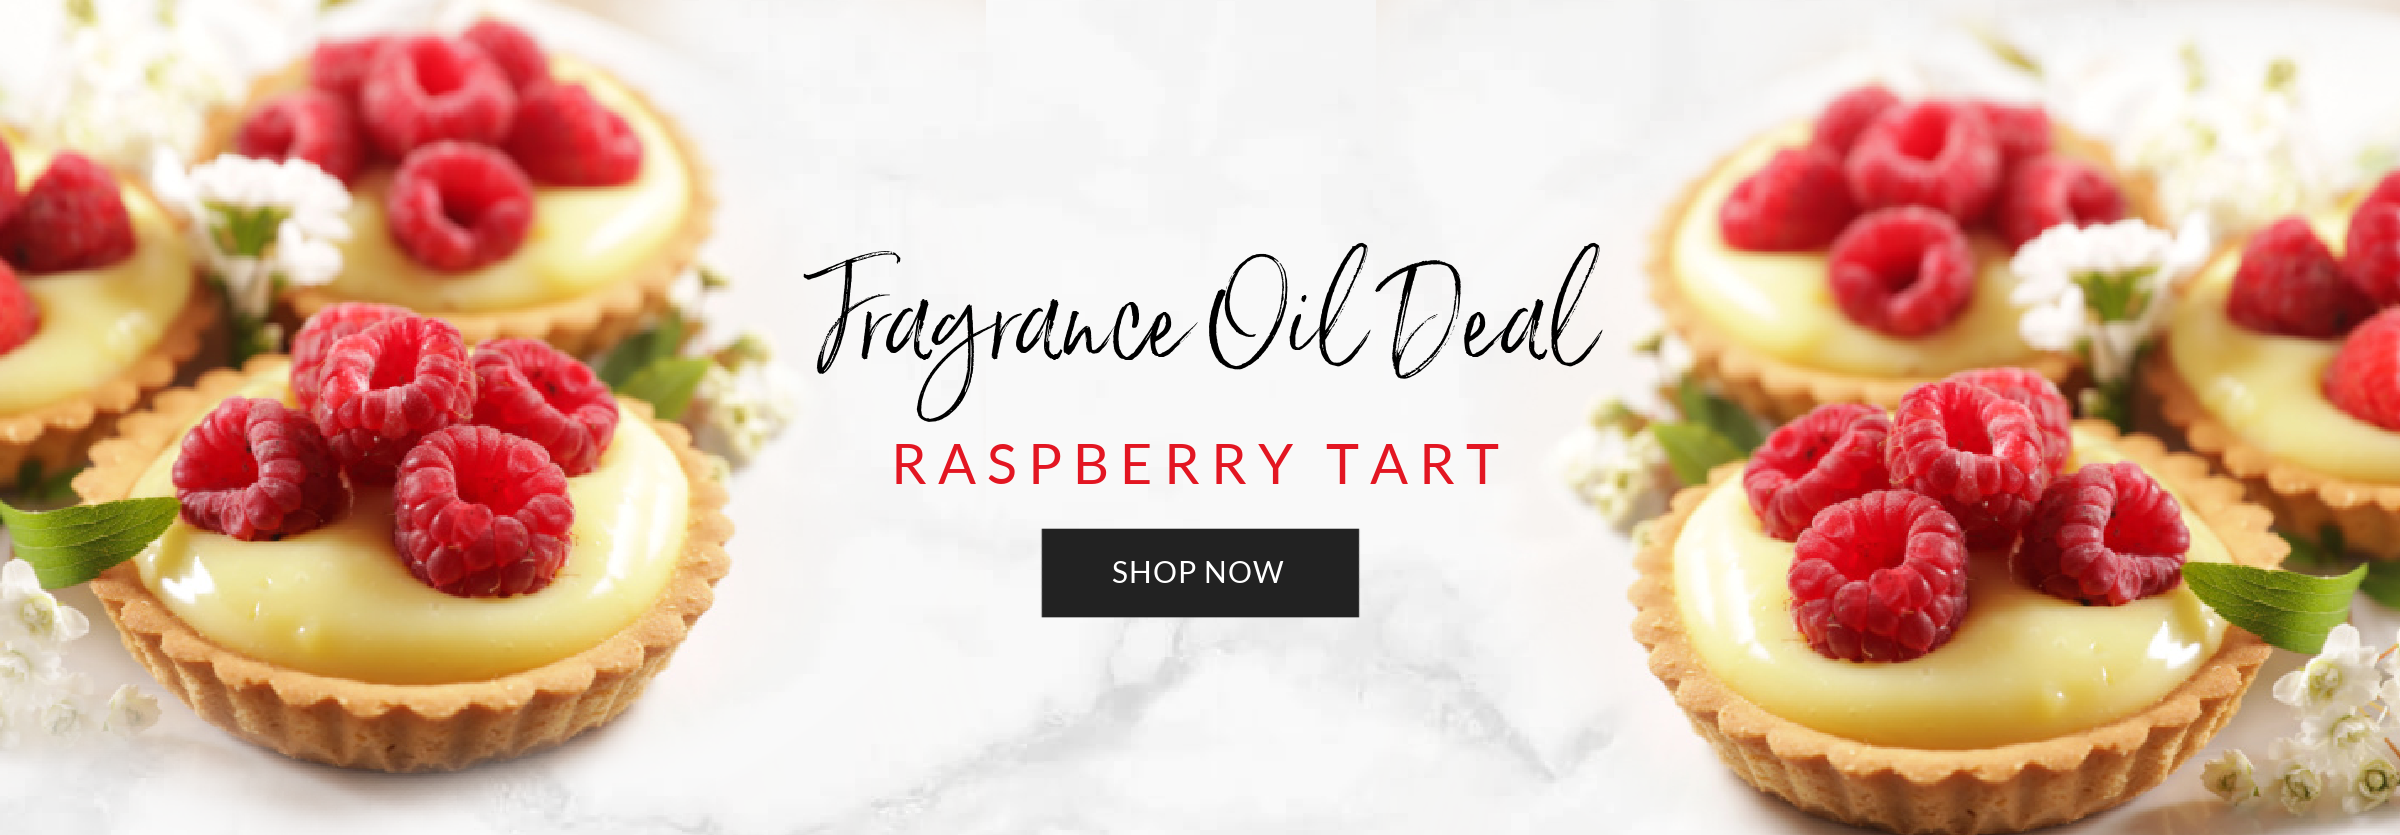 Raspberry Violet - Premium Fragrance Oil – NorthWood Distributing